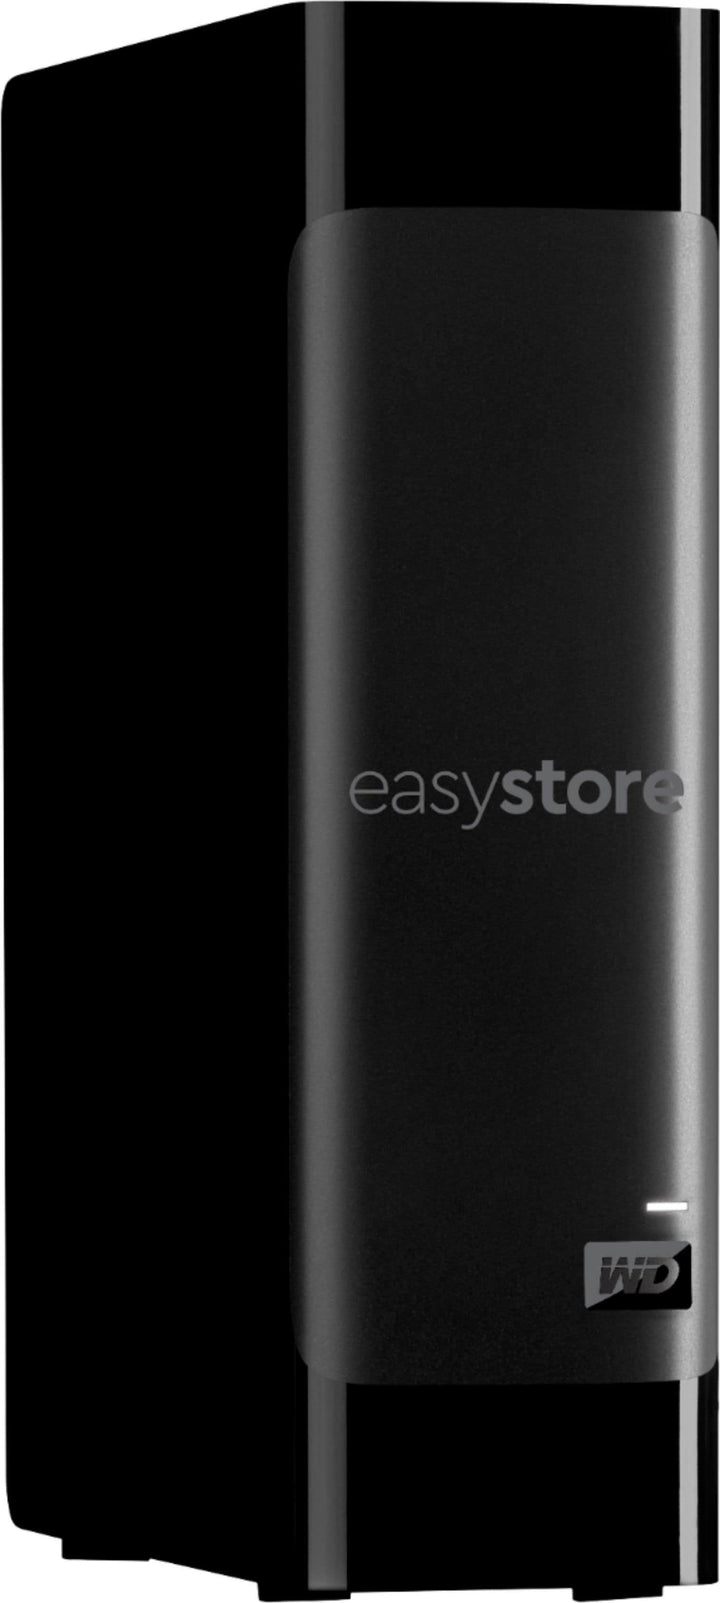 WD - easystore 16TB External USB 3.0 Hard Drive - Black_3